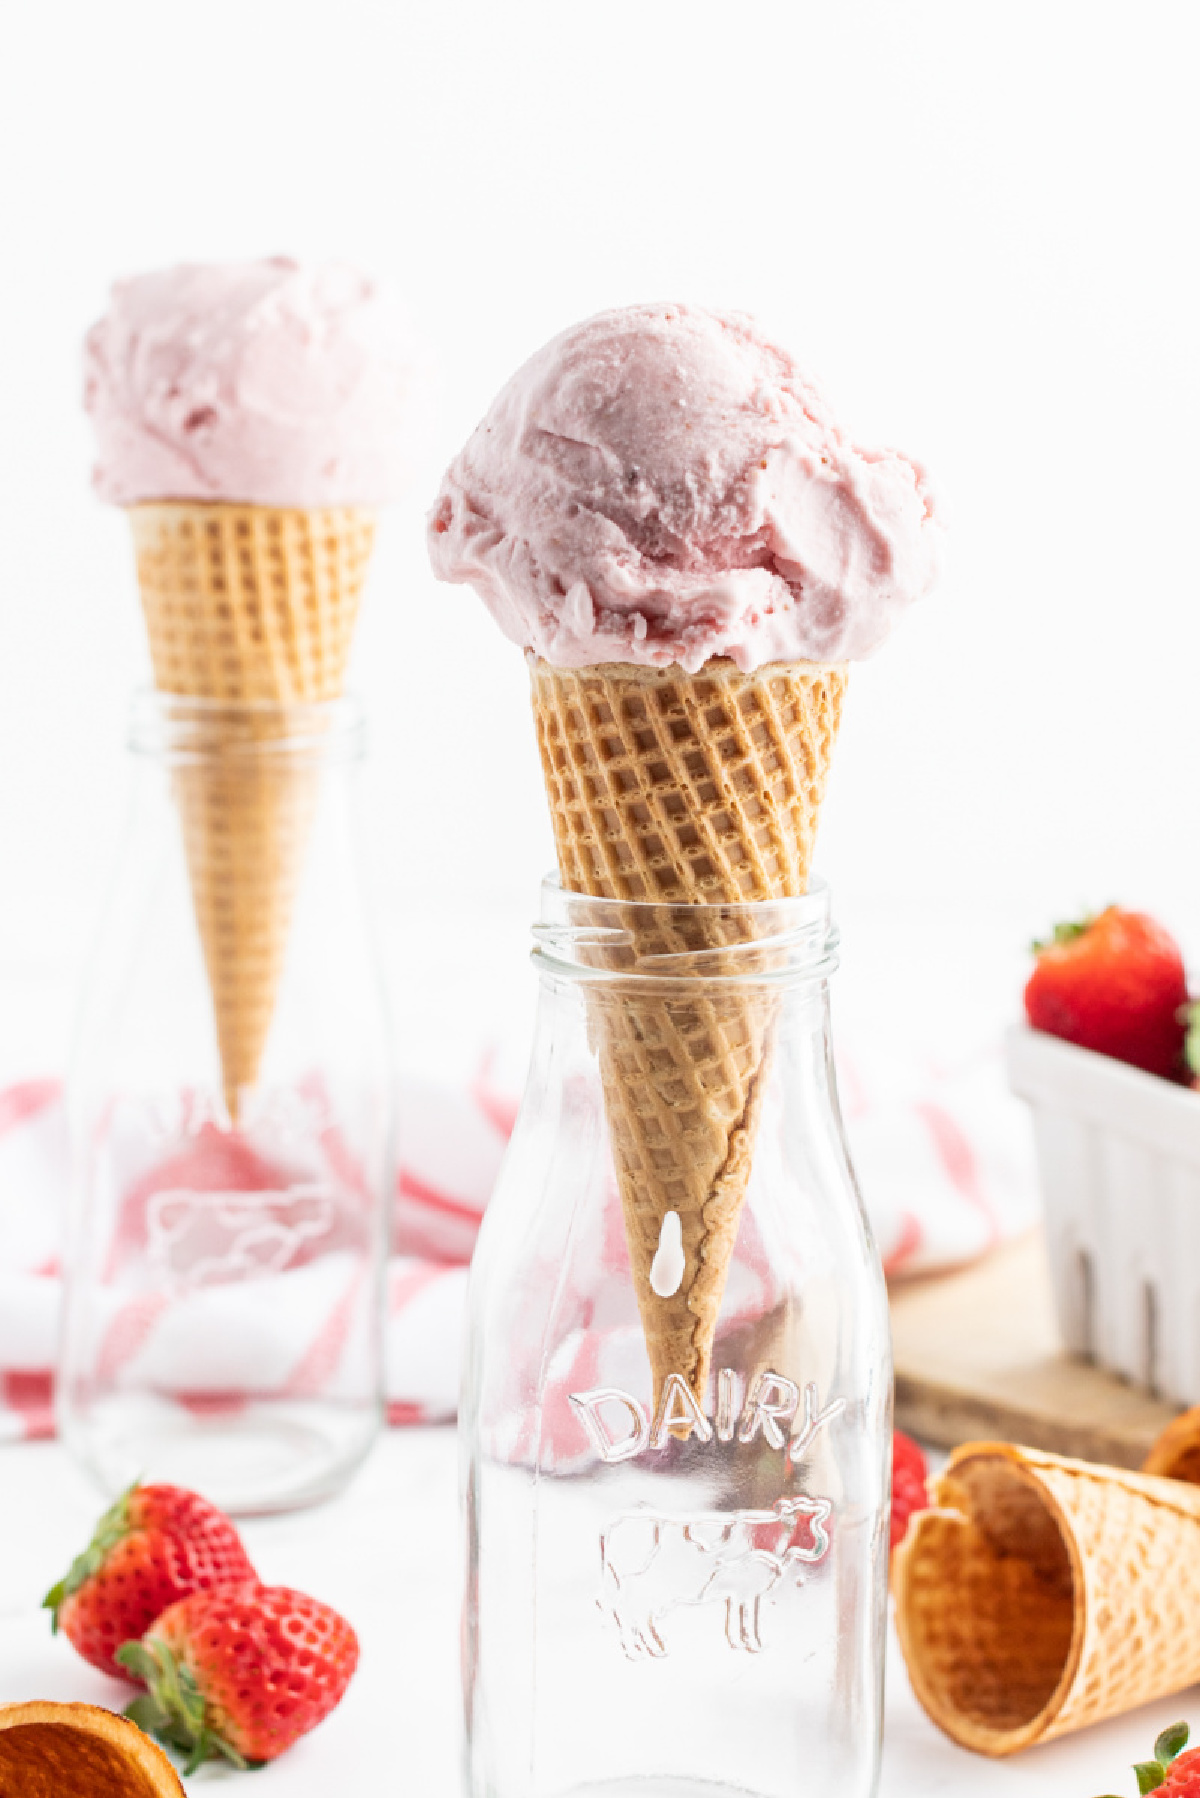 two strawberry ice cream cones